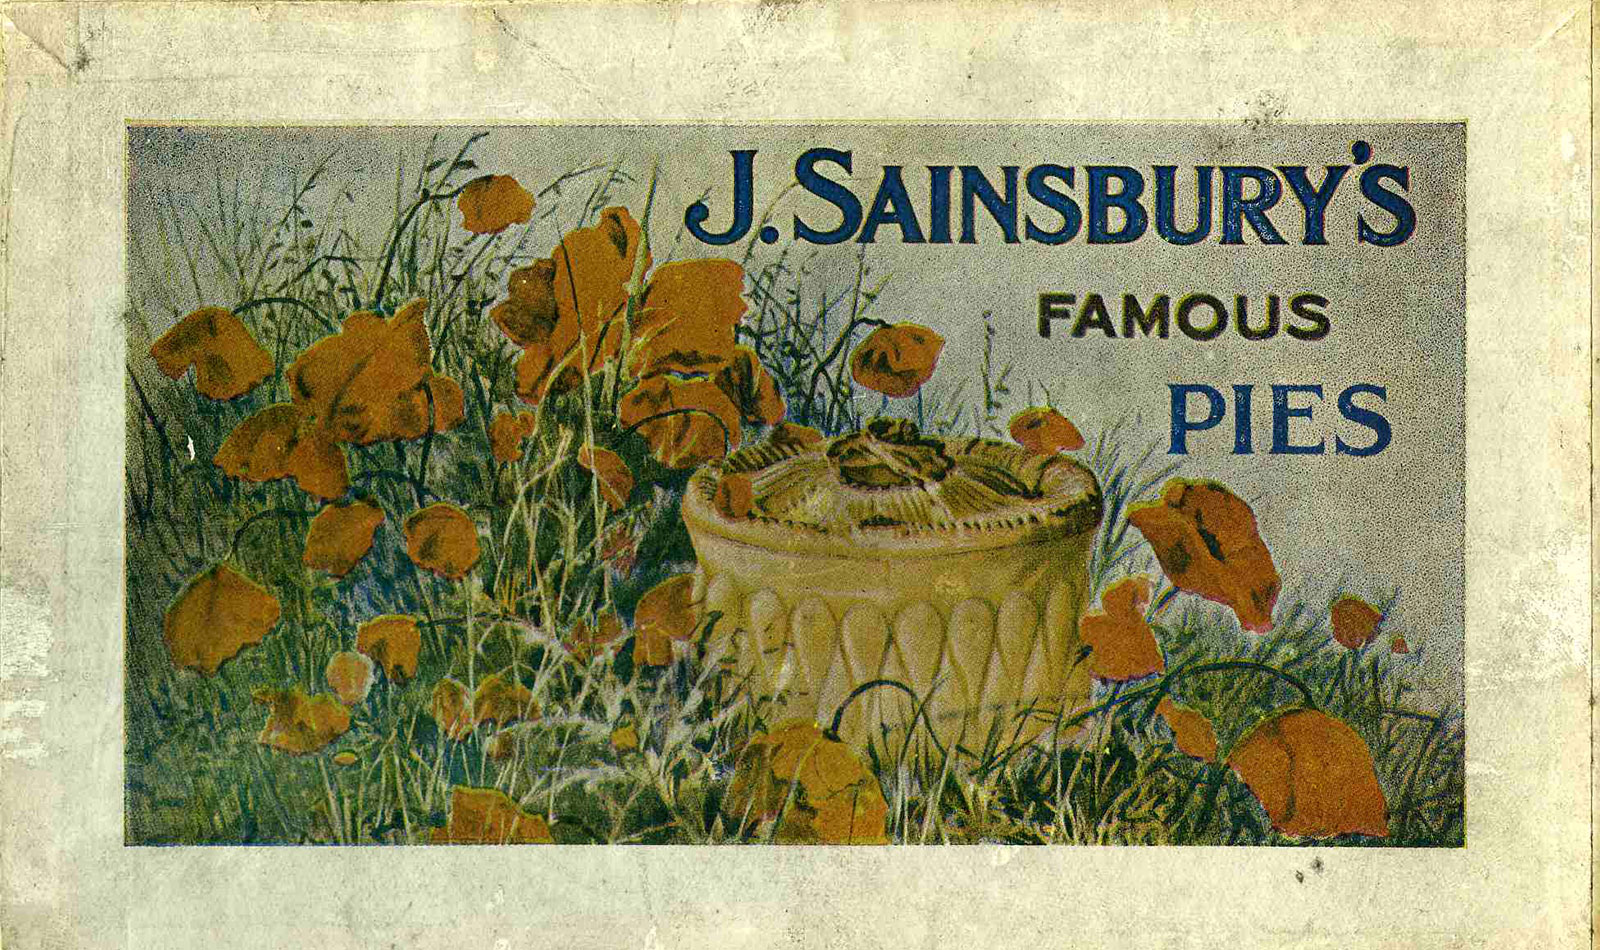 
J. Sainsbury's famous pies box lid c. 1920-30